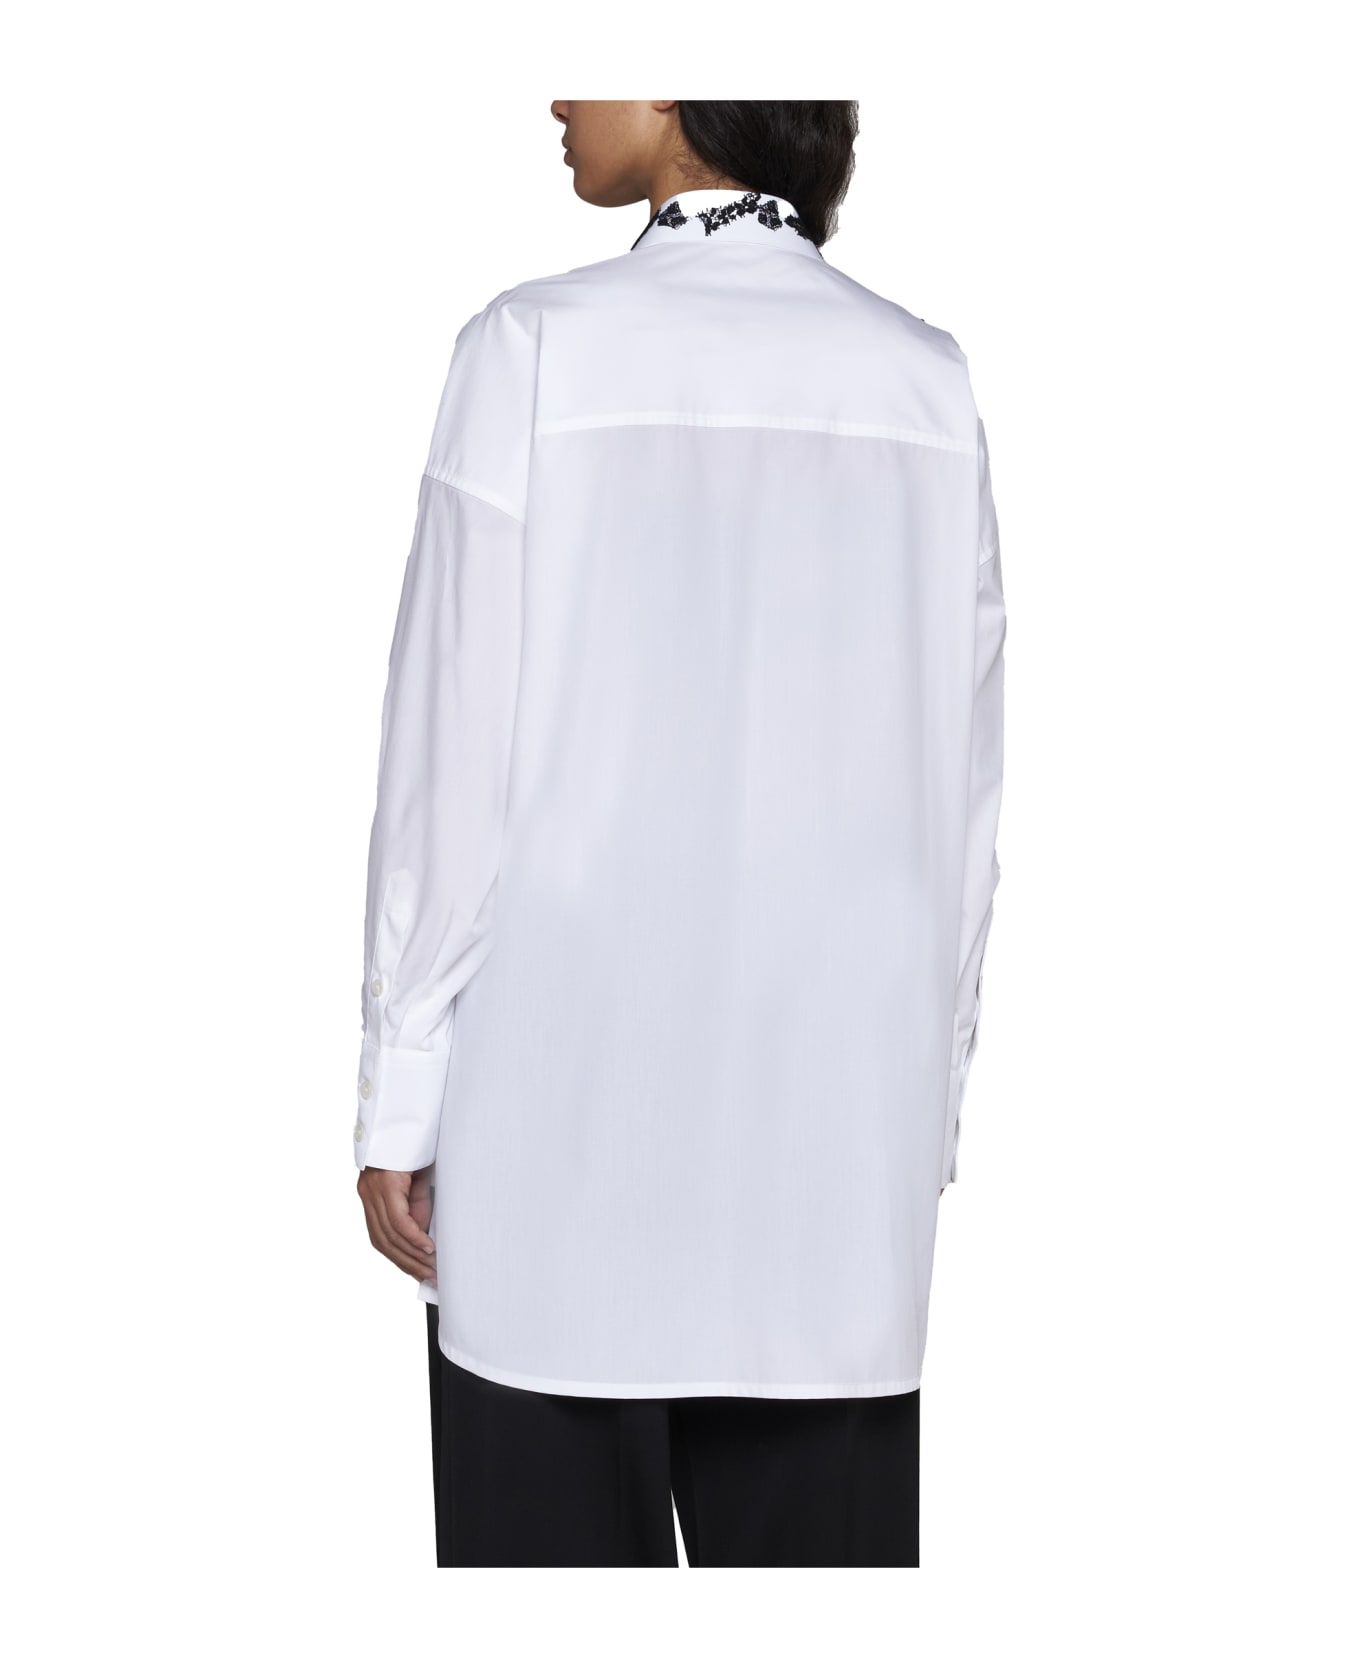 Dolce & Gabbana Lace Appliques Oversize Shirt - Bianco otticco ブラウス